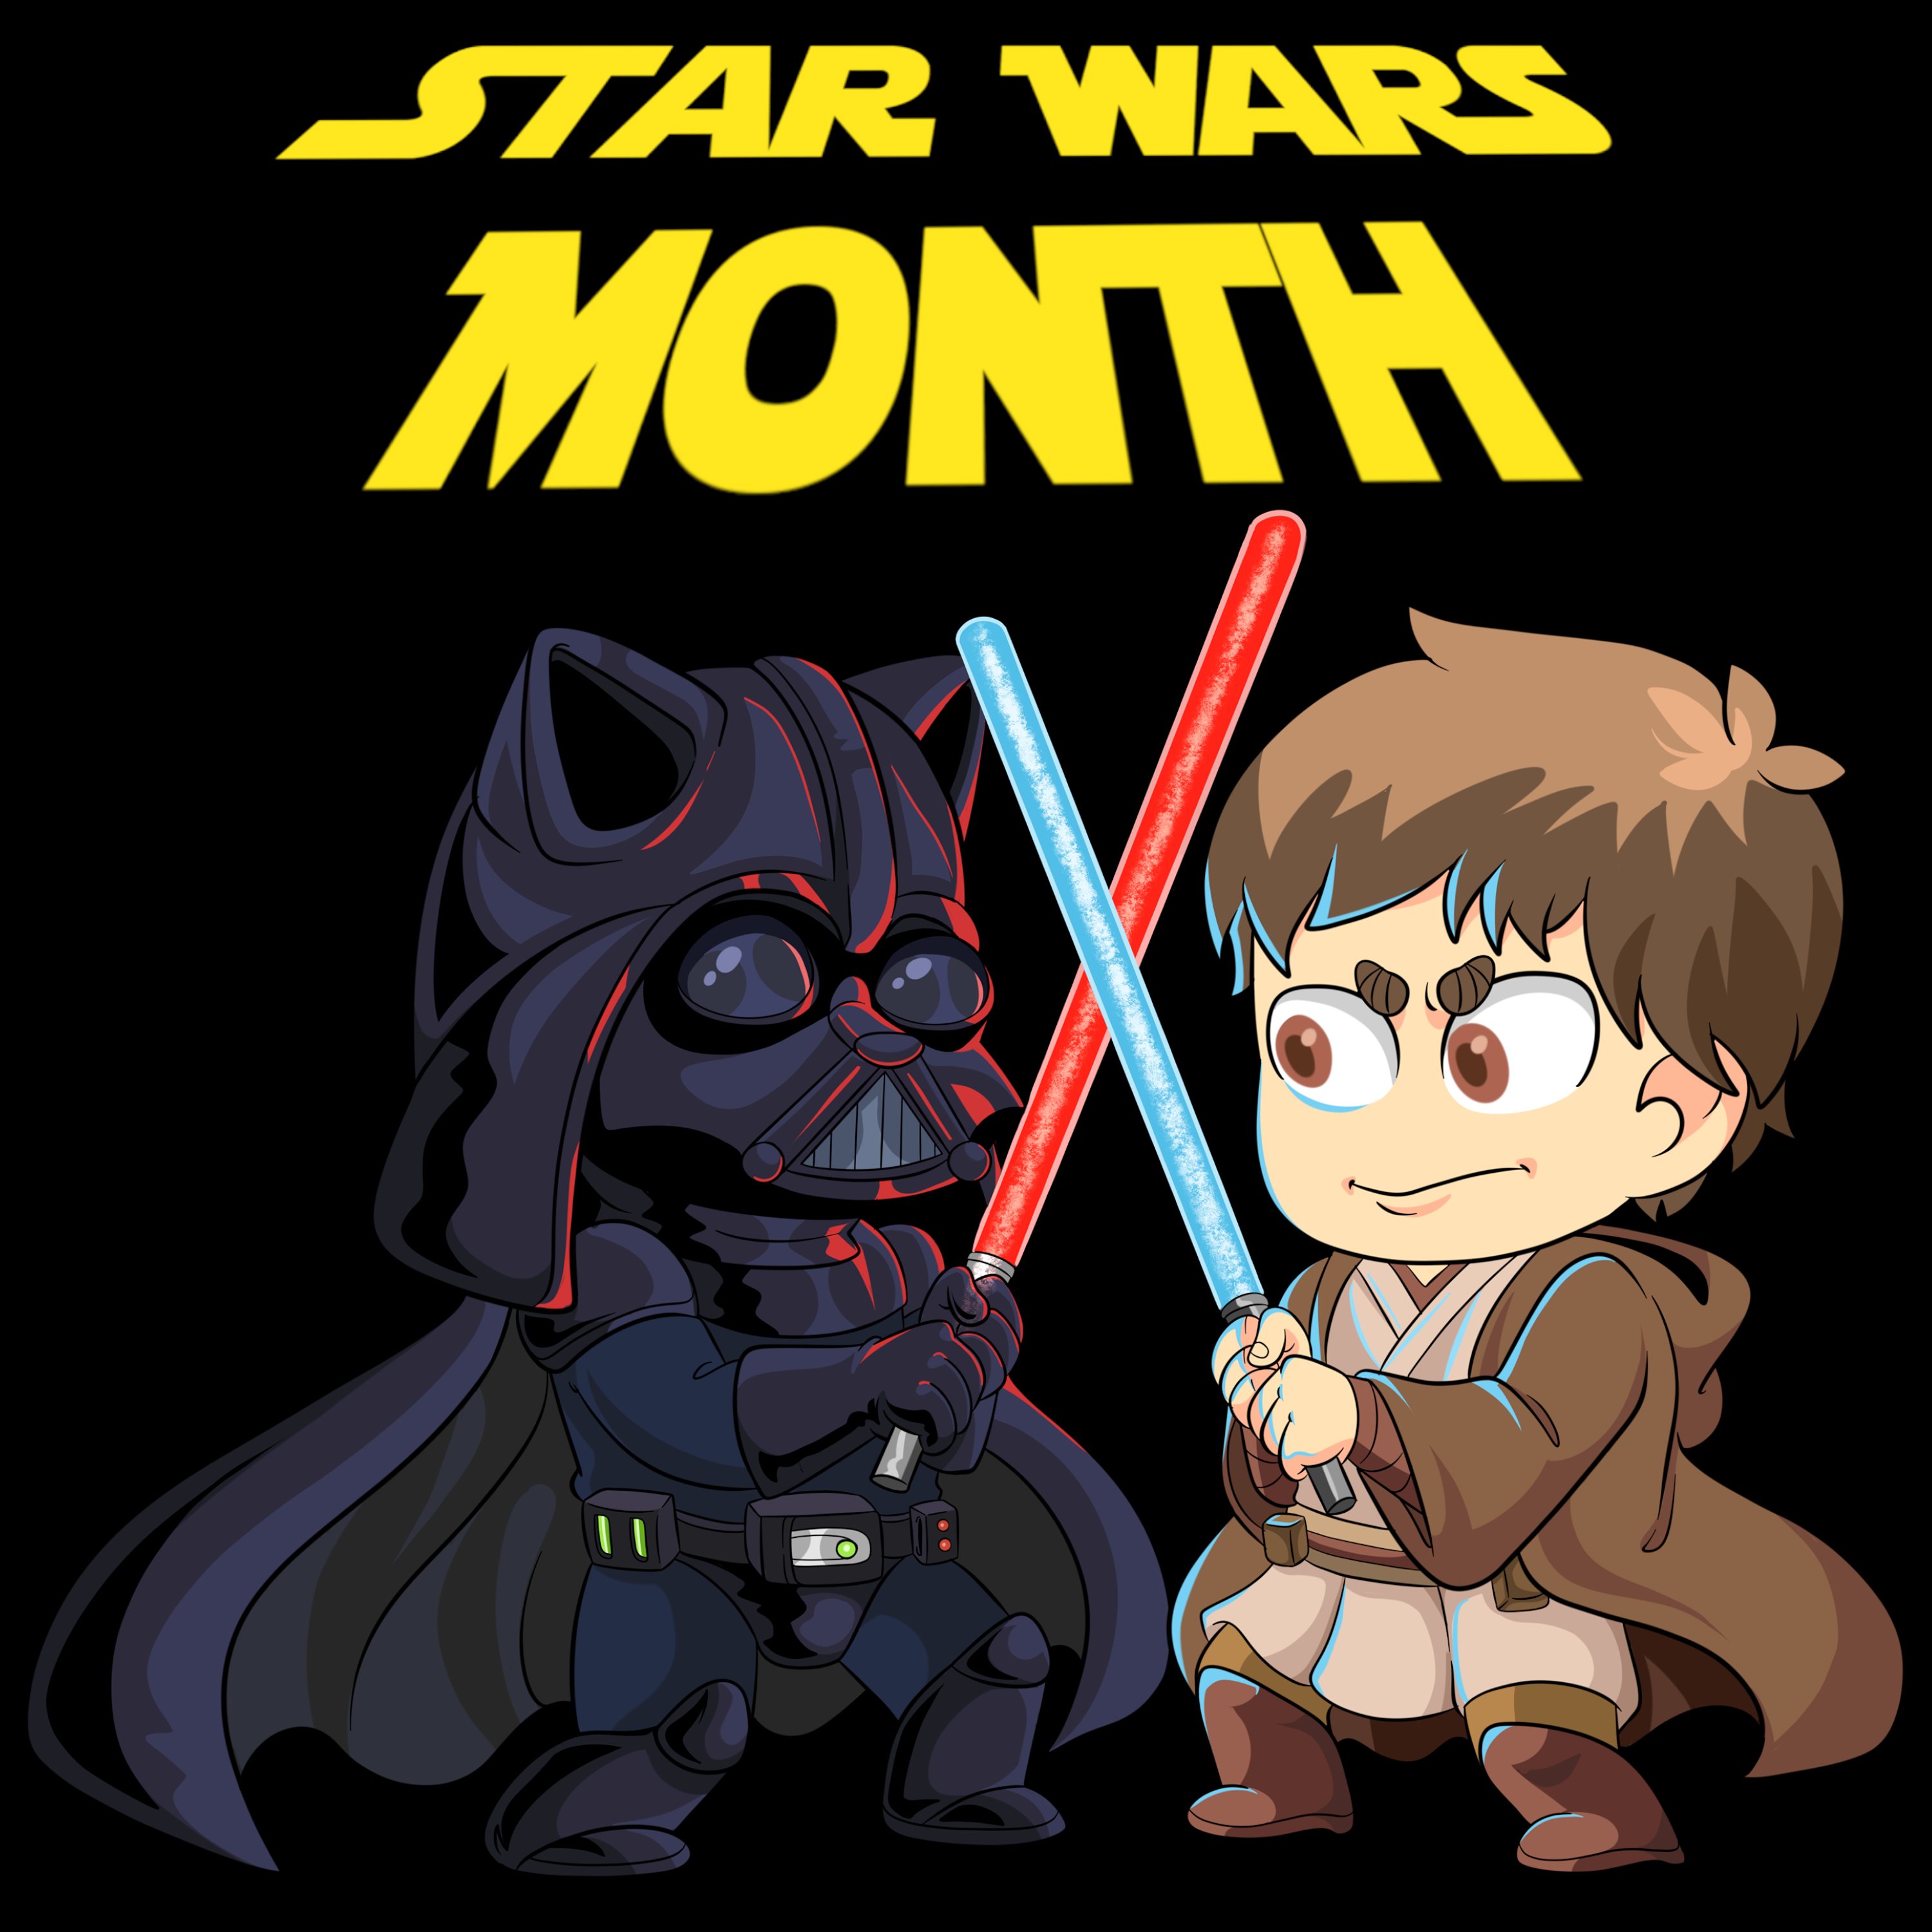 You know it to be true! Star Wars Trivia Quiz || Star Wars Month